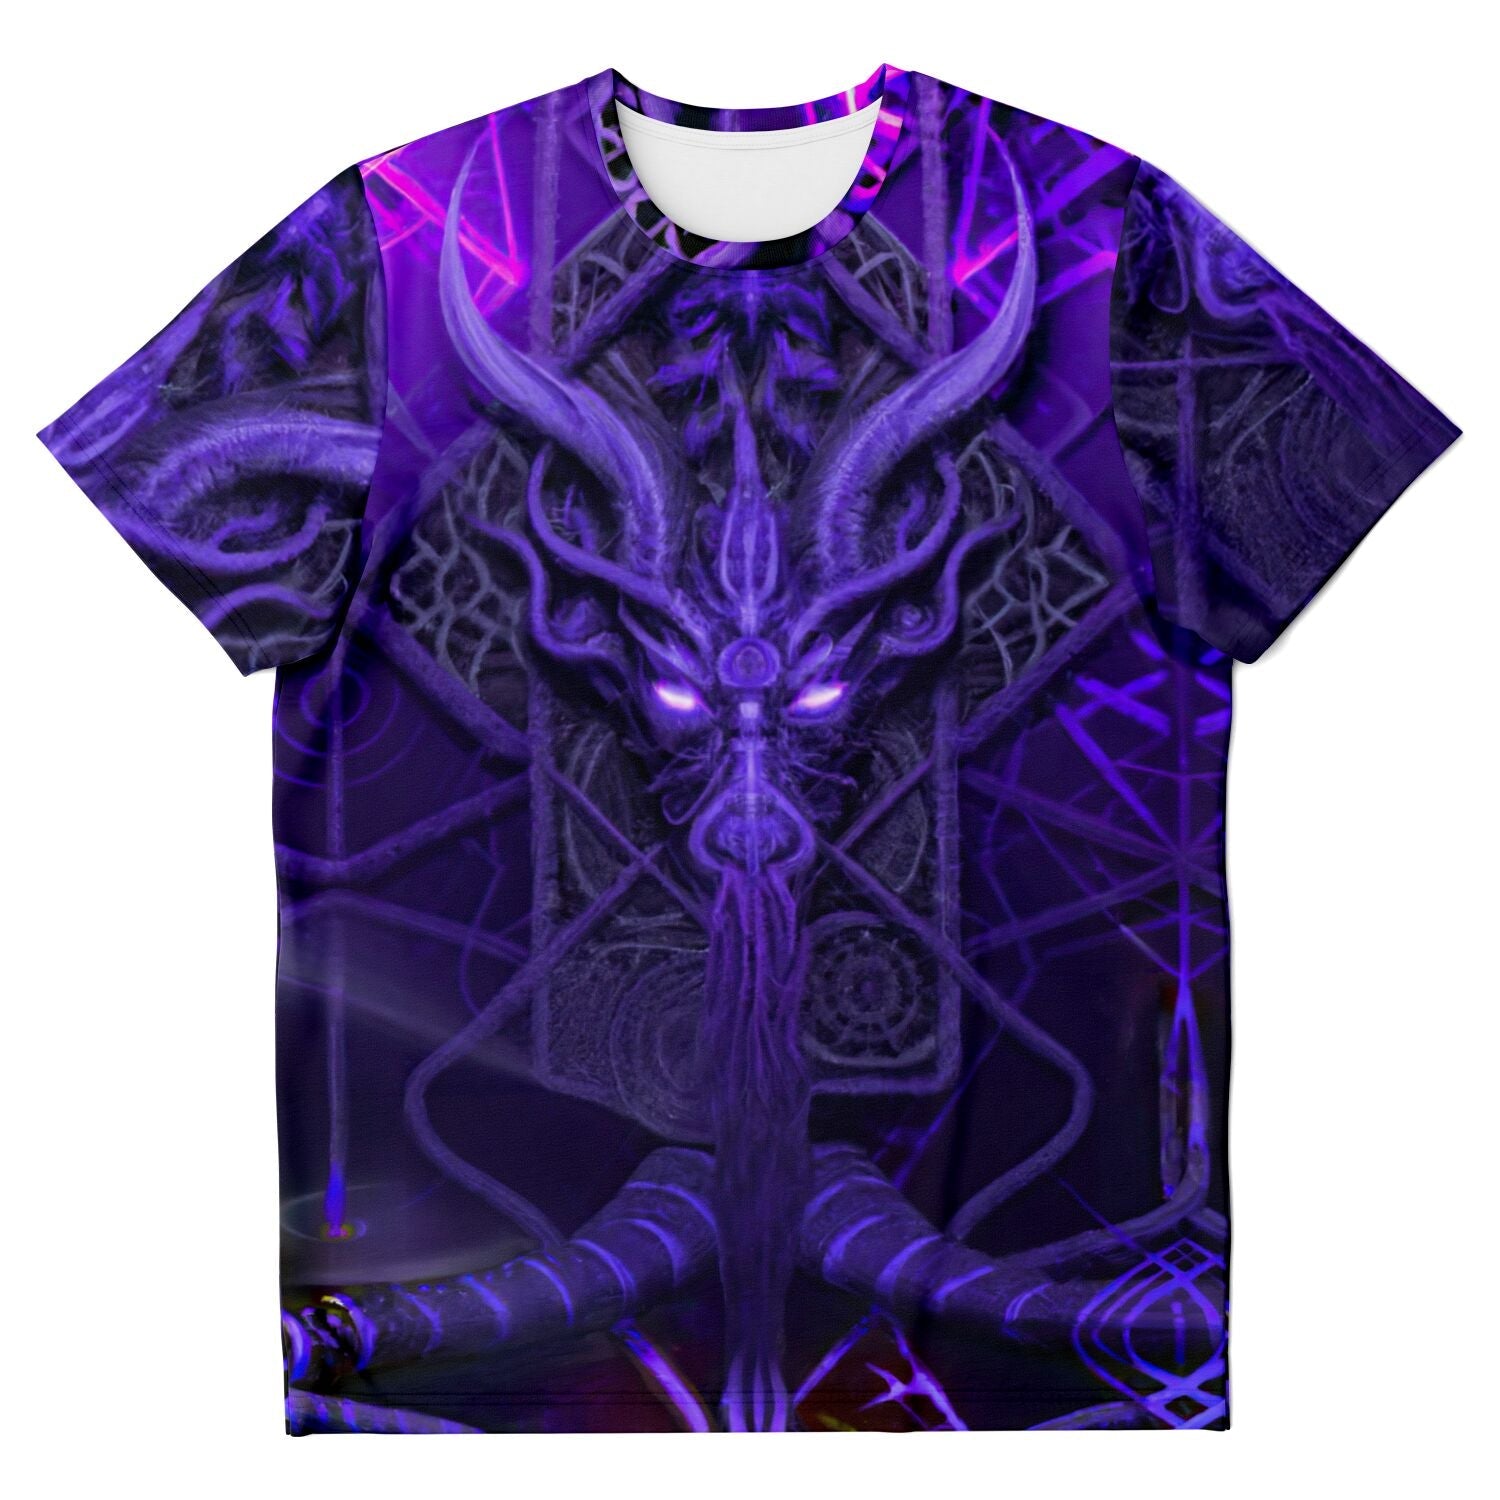 T-shirt XS Cyborg Baphomet | Digital Tentacle Rave | Trippy EDM Consciousness Graphic Art T-Shirt